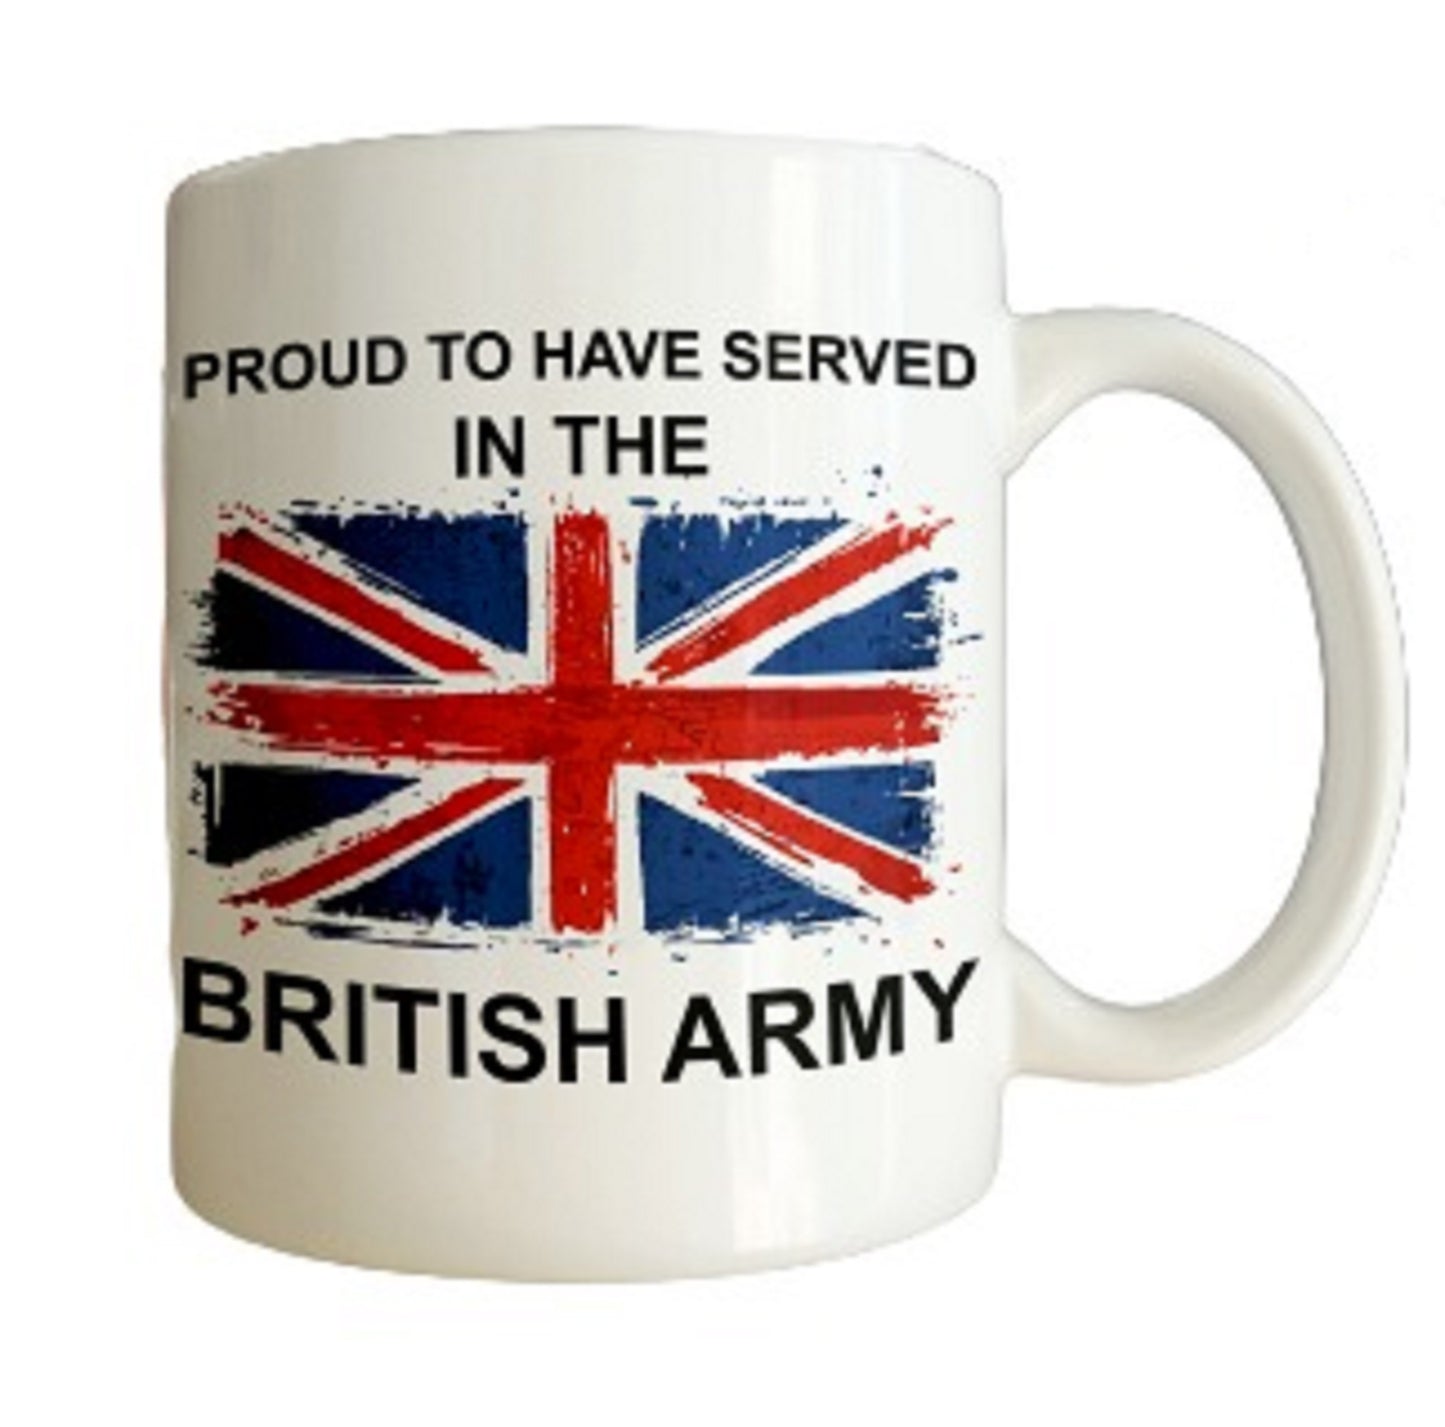  British Army Veteran Coffee Mug by Free Spirit Accessories sold by Free Spirit Accessories